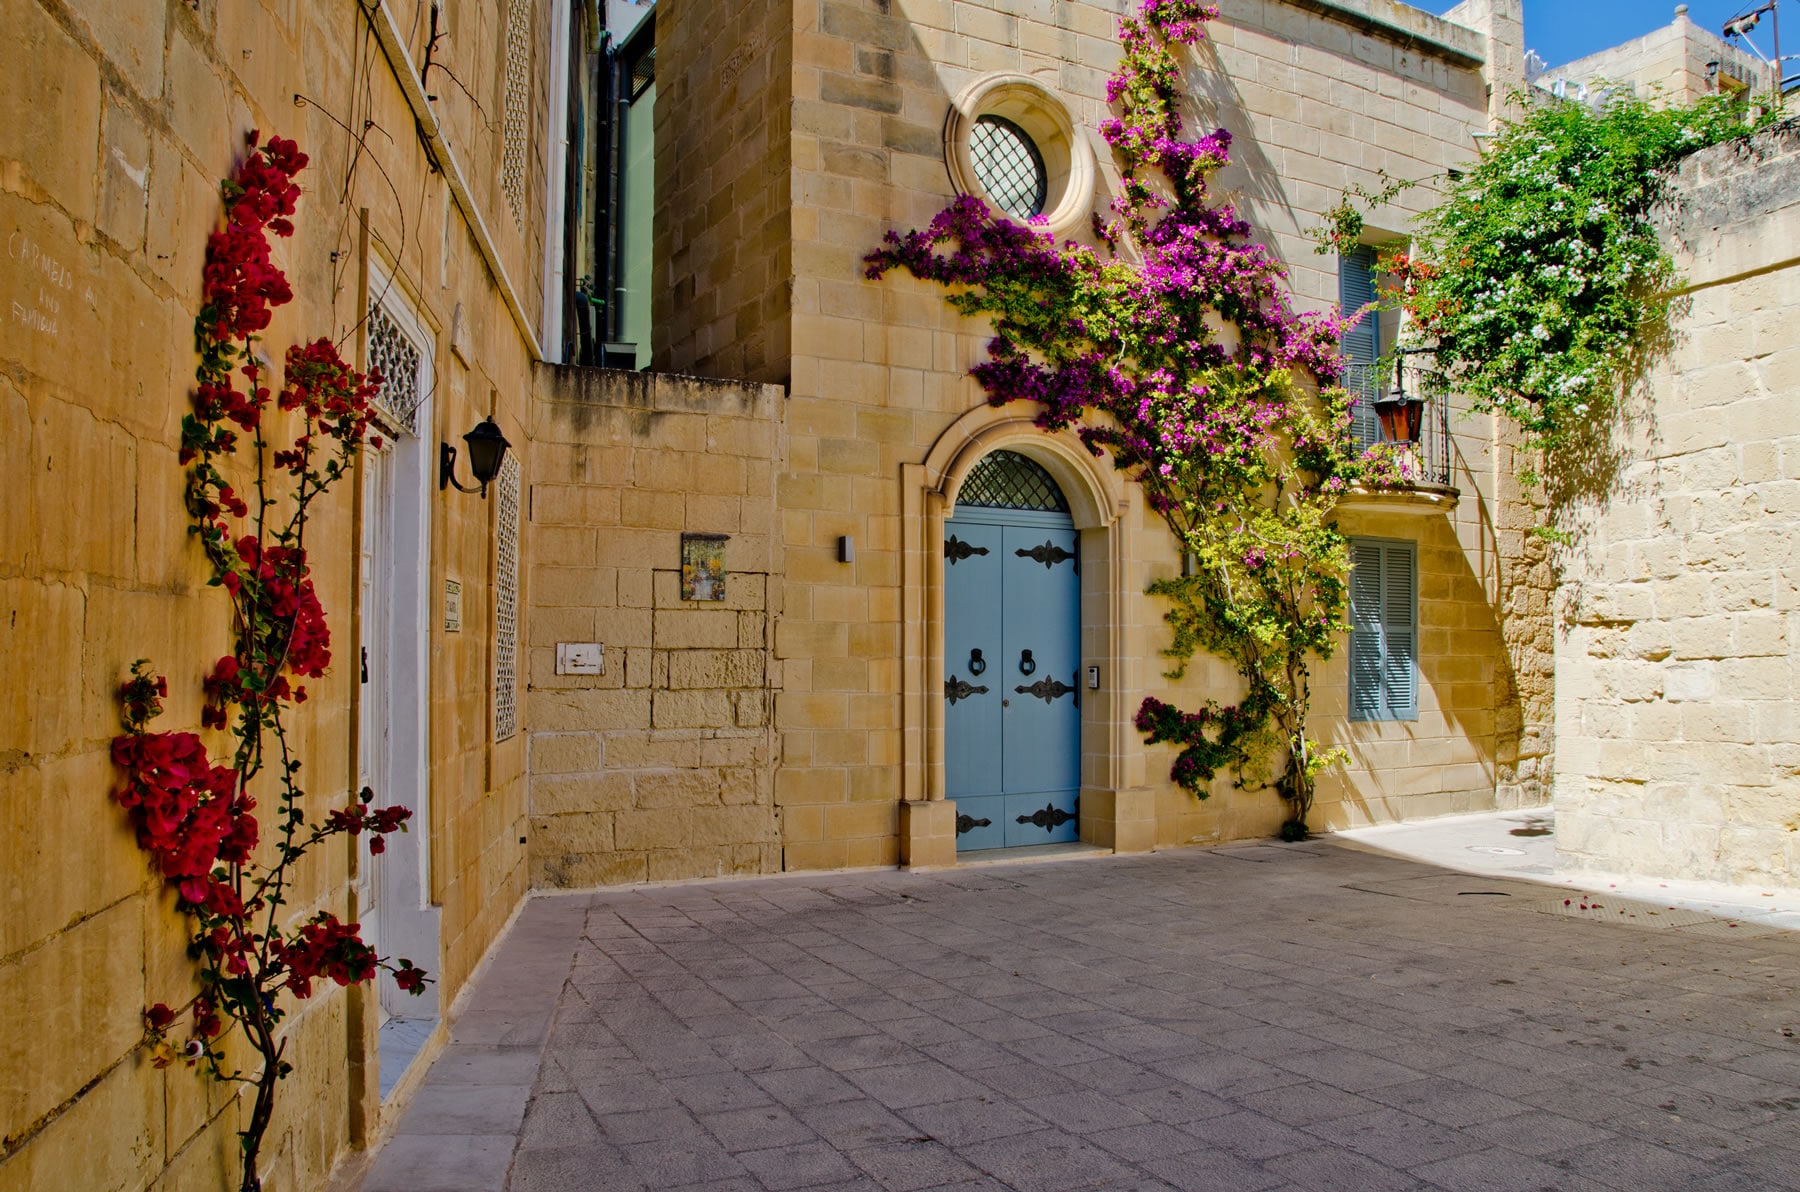 One Day In Malta | Walking Tours Malta